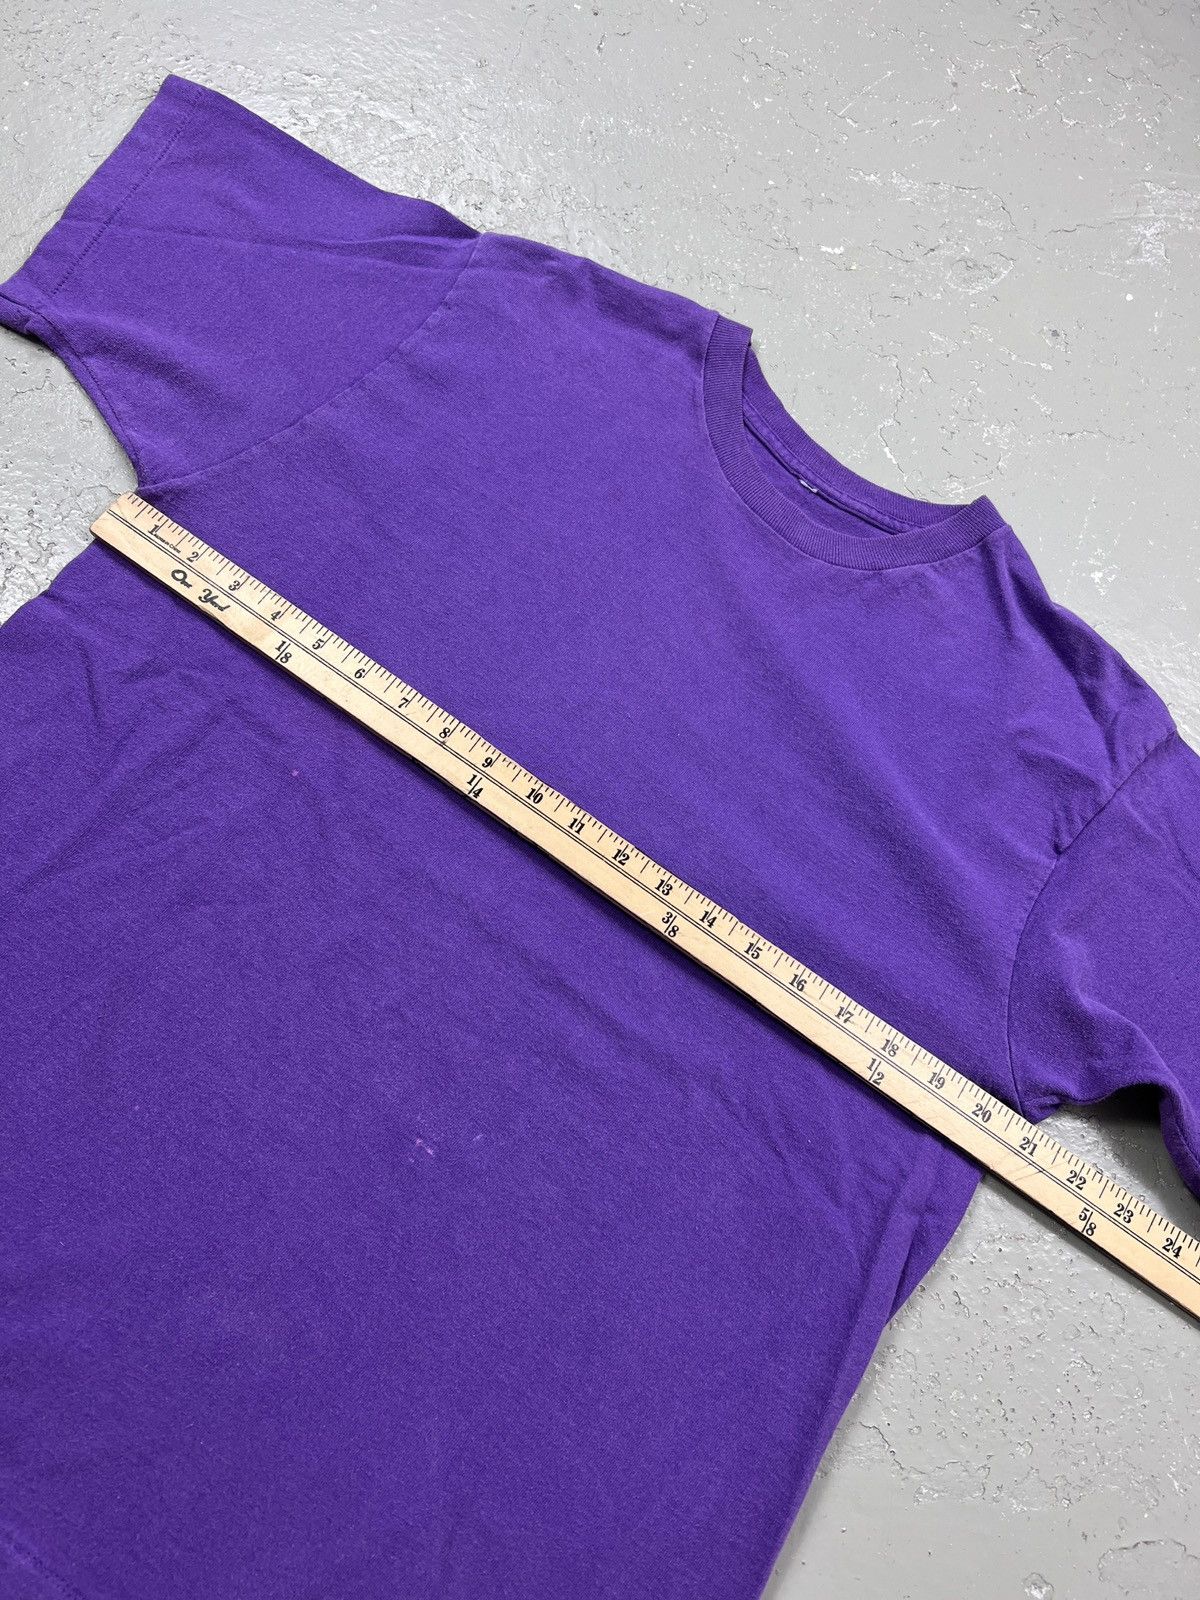 Vintage 90s Single Stitch Purple Blank Size Large Size US L / EU 52-54 / 3 - 5 Thumbnail